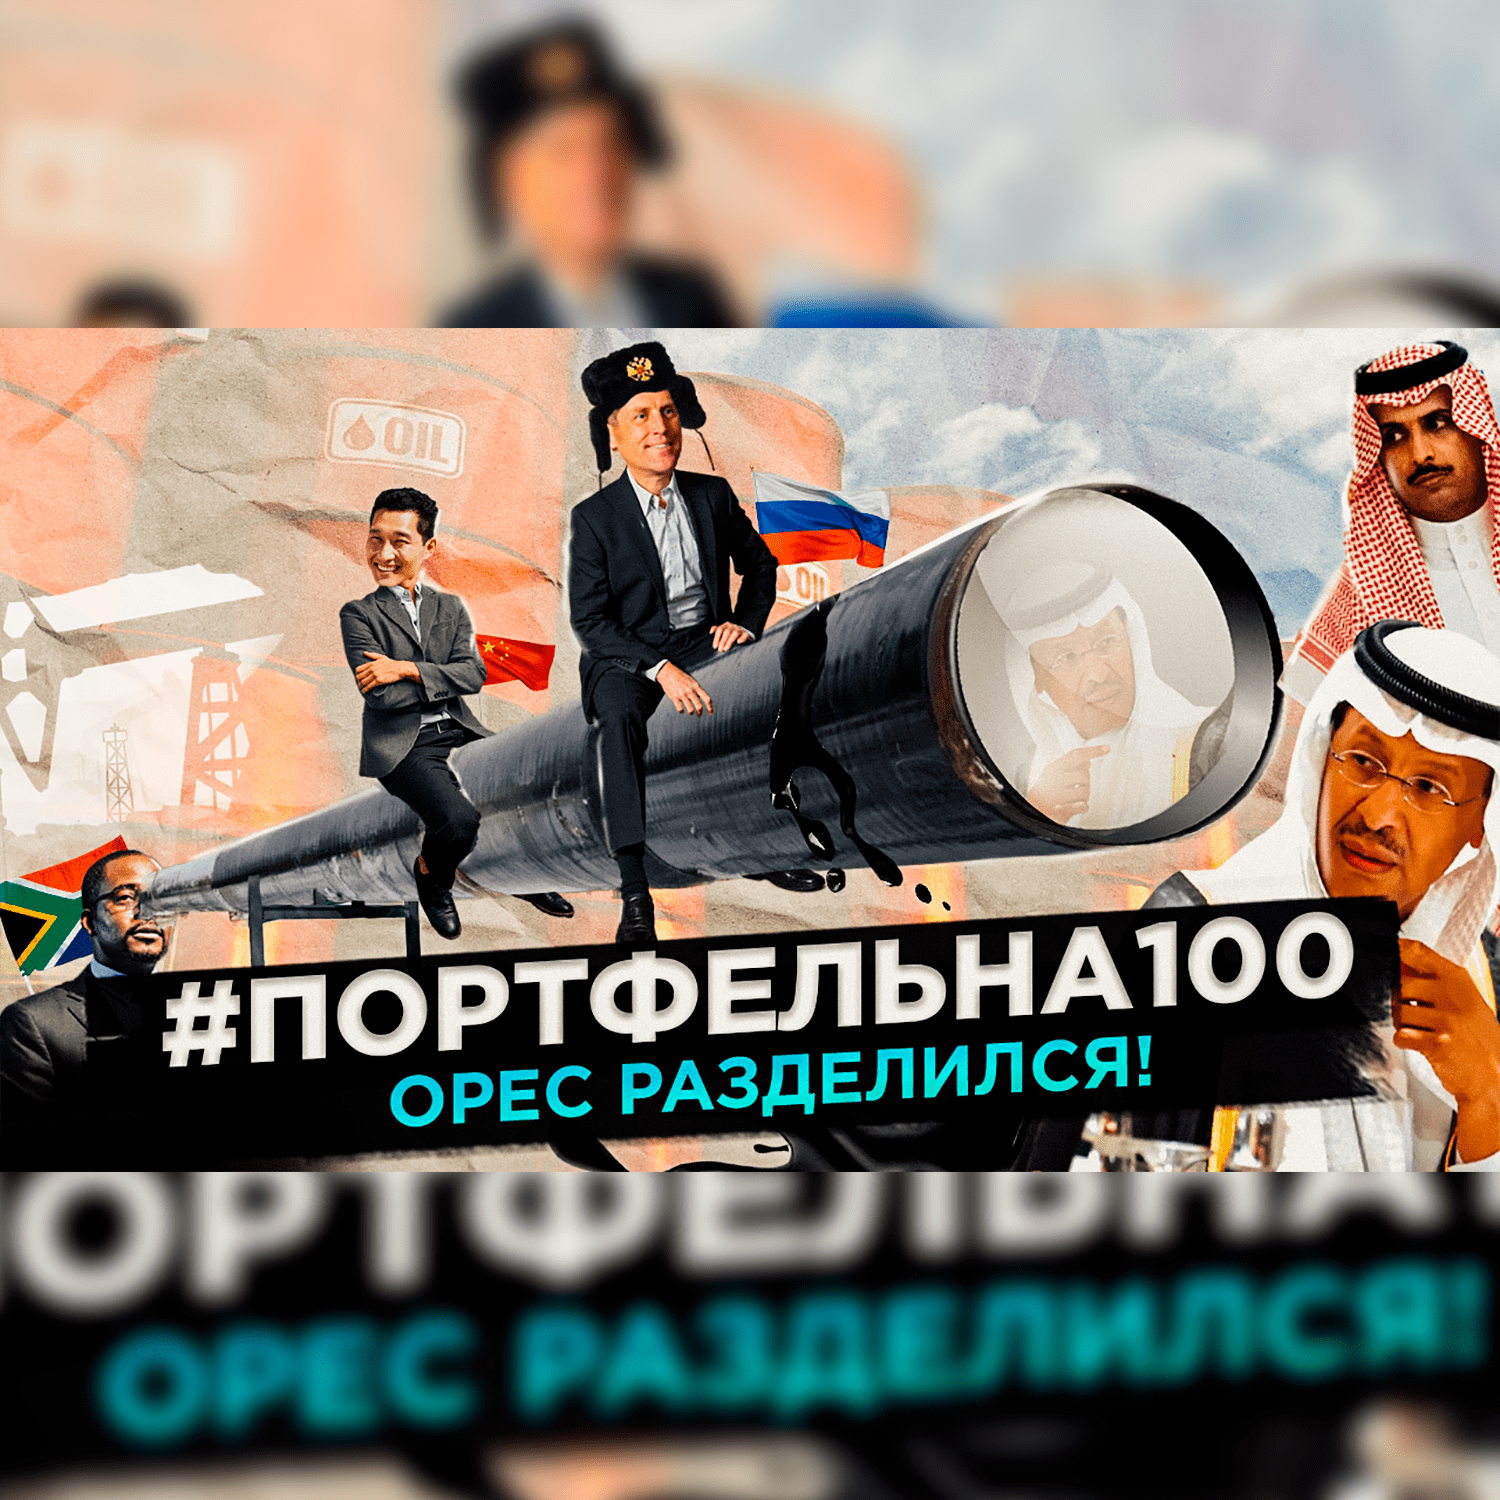 OPEC разделился! #Портфельна100 podcast poster